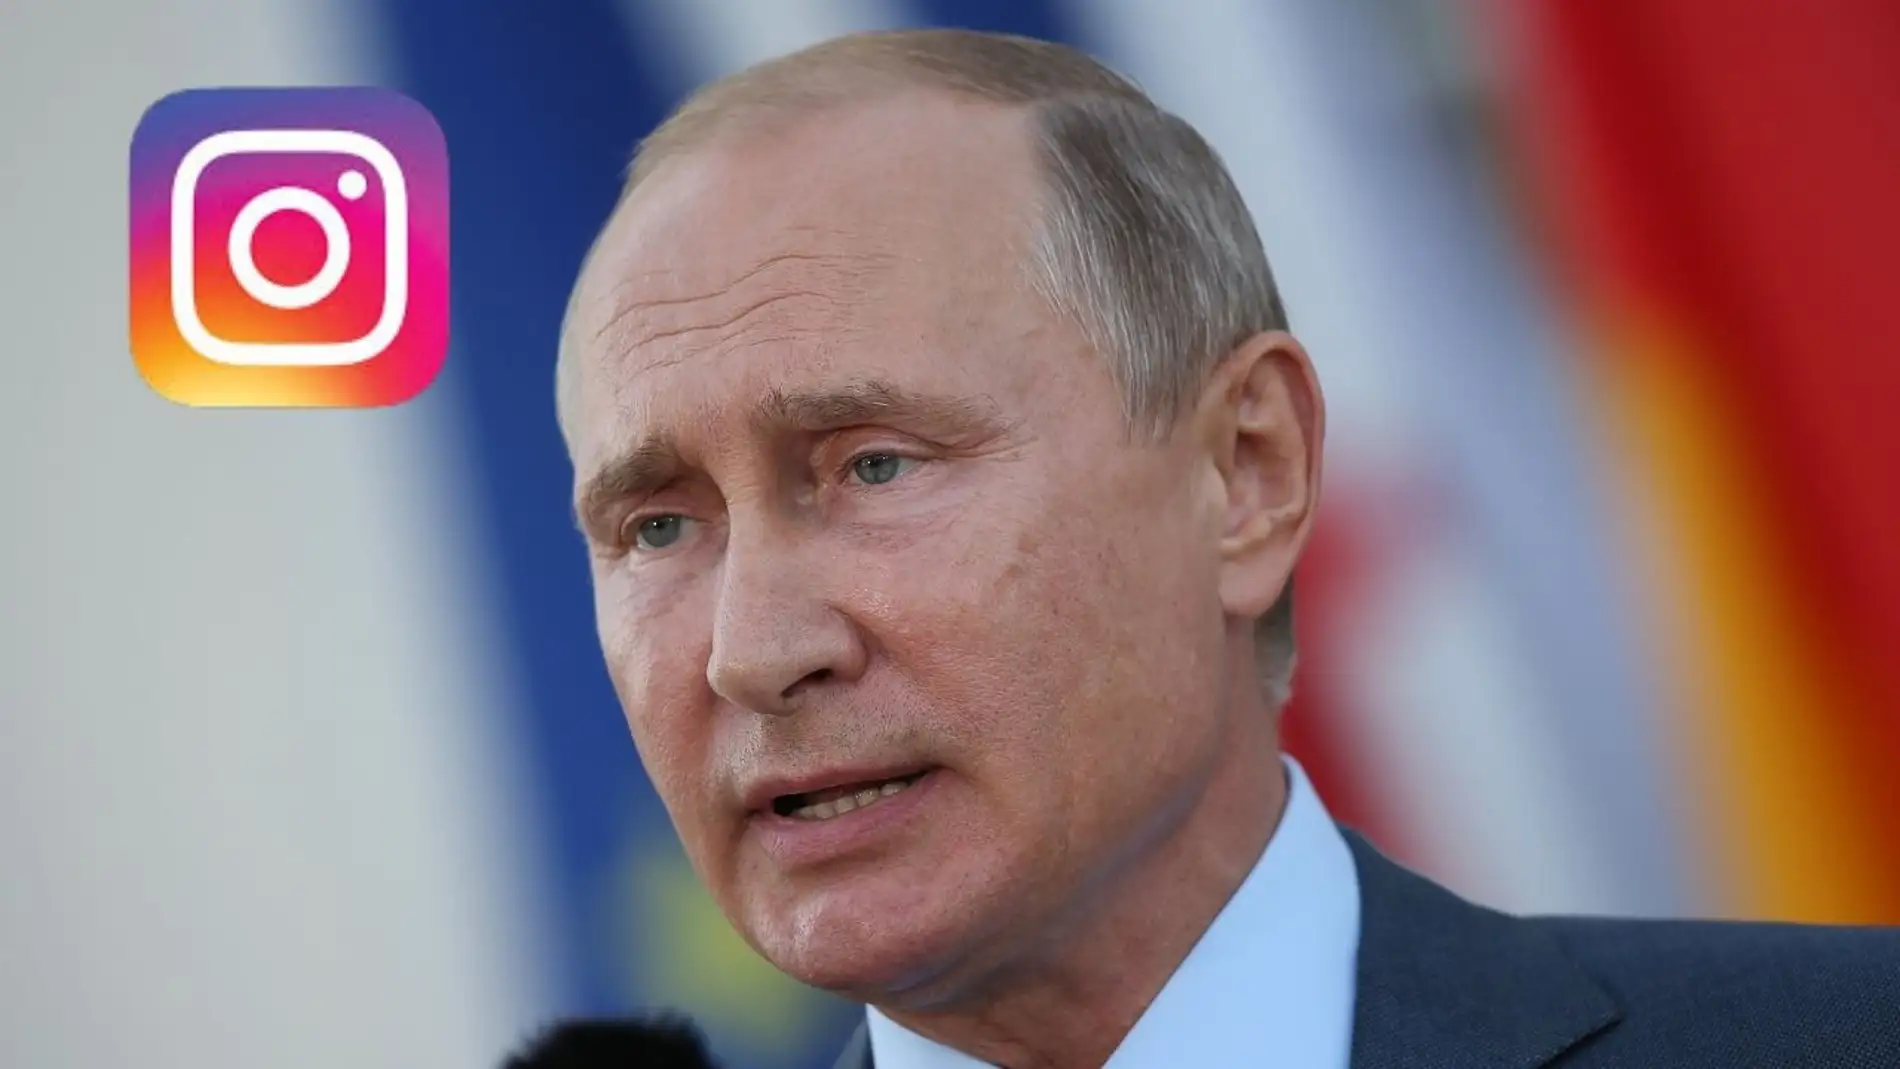 Imagen de Vladimir Putin: Sean Gallup/Getty Images | Montaje: ondacero.es